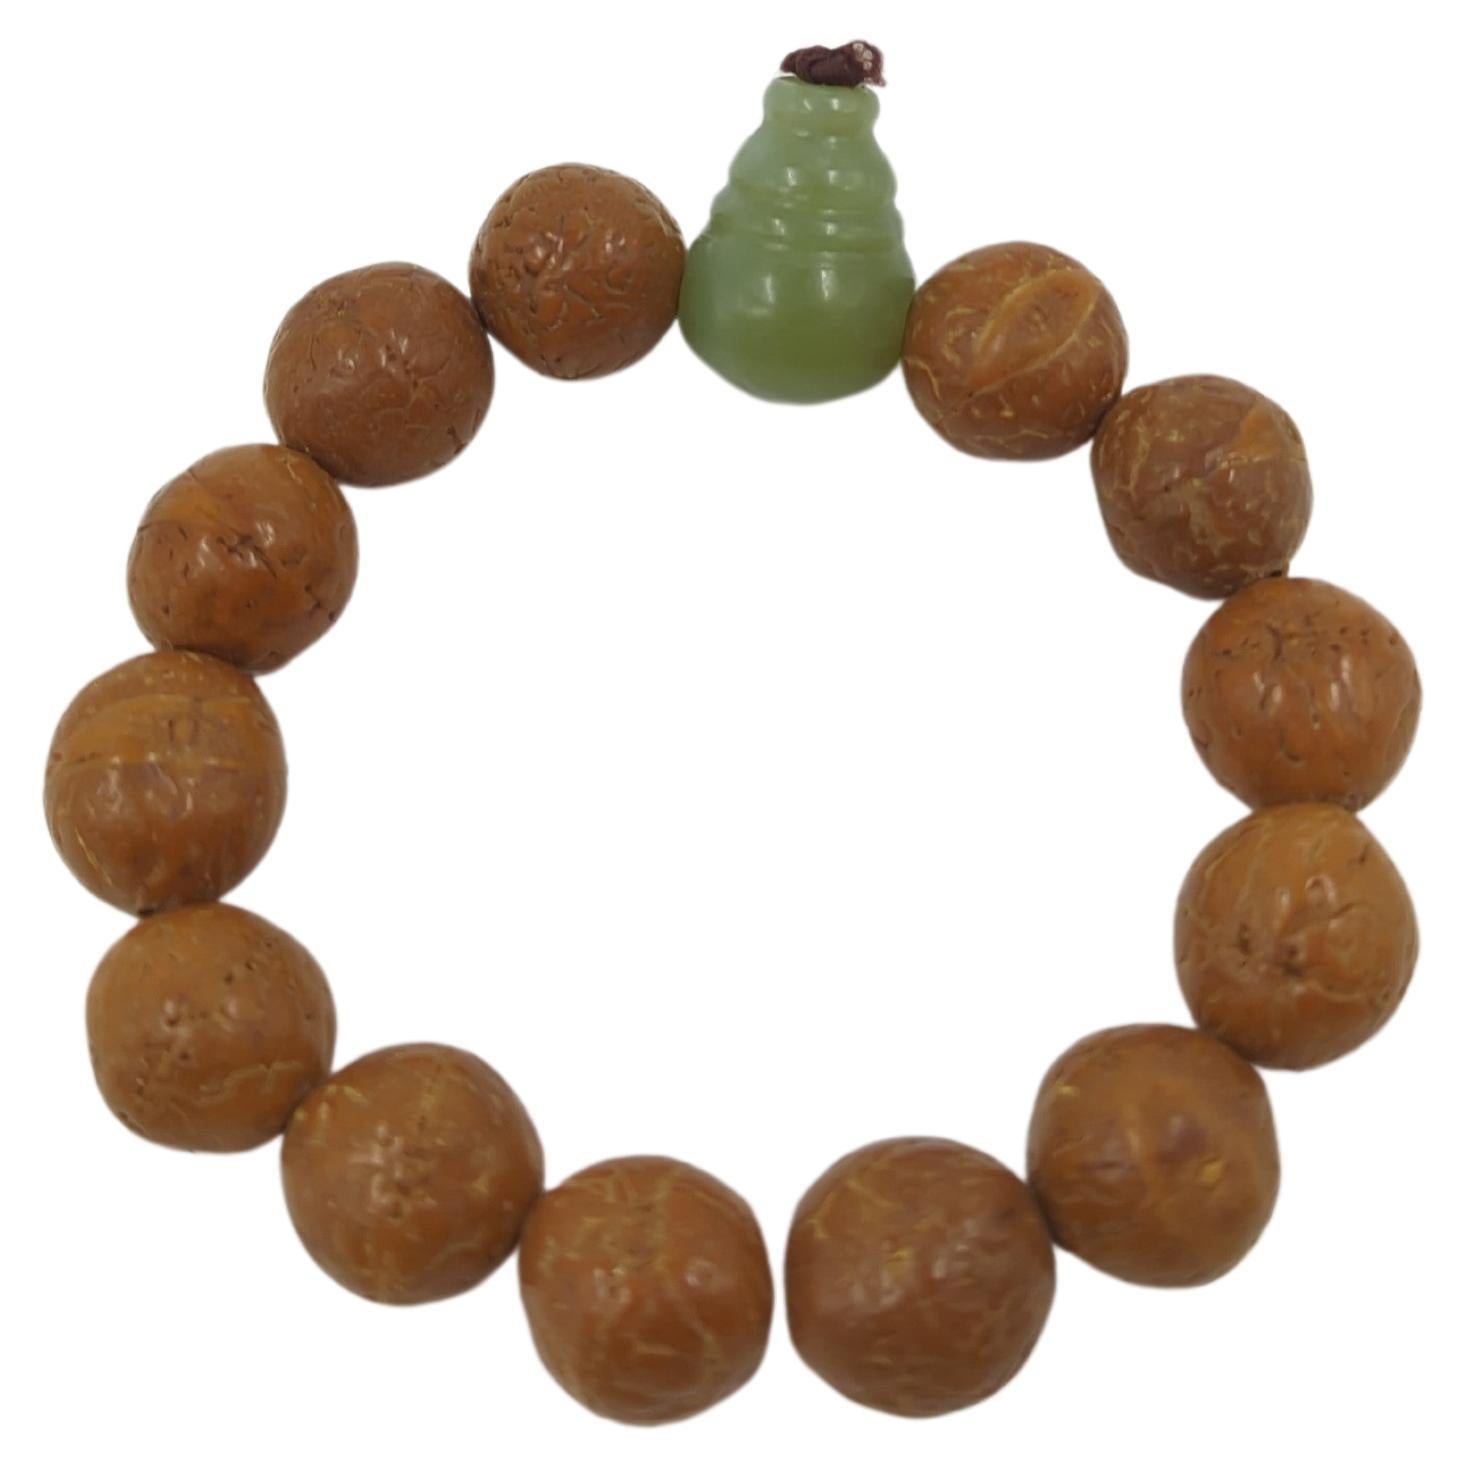 Antique Chinese Celadon Jade Hulu Bead Bodhi Seeds Bracelet - BEAUTIFUL PATINA